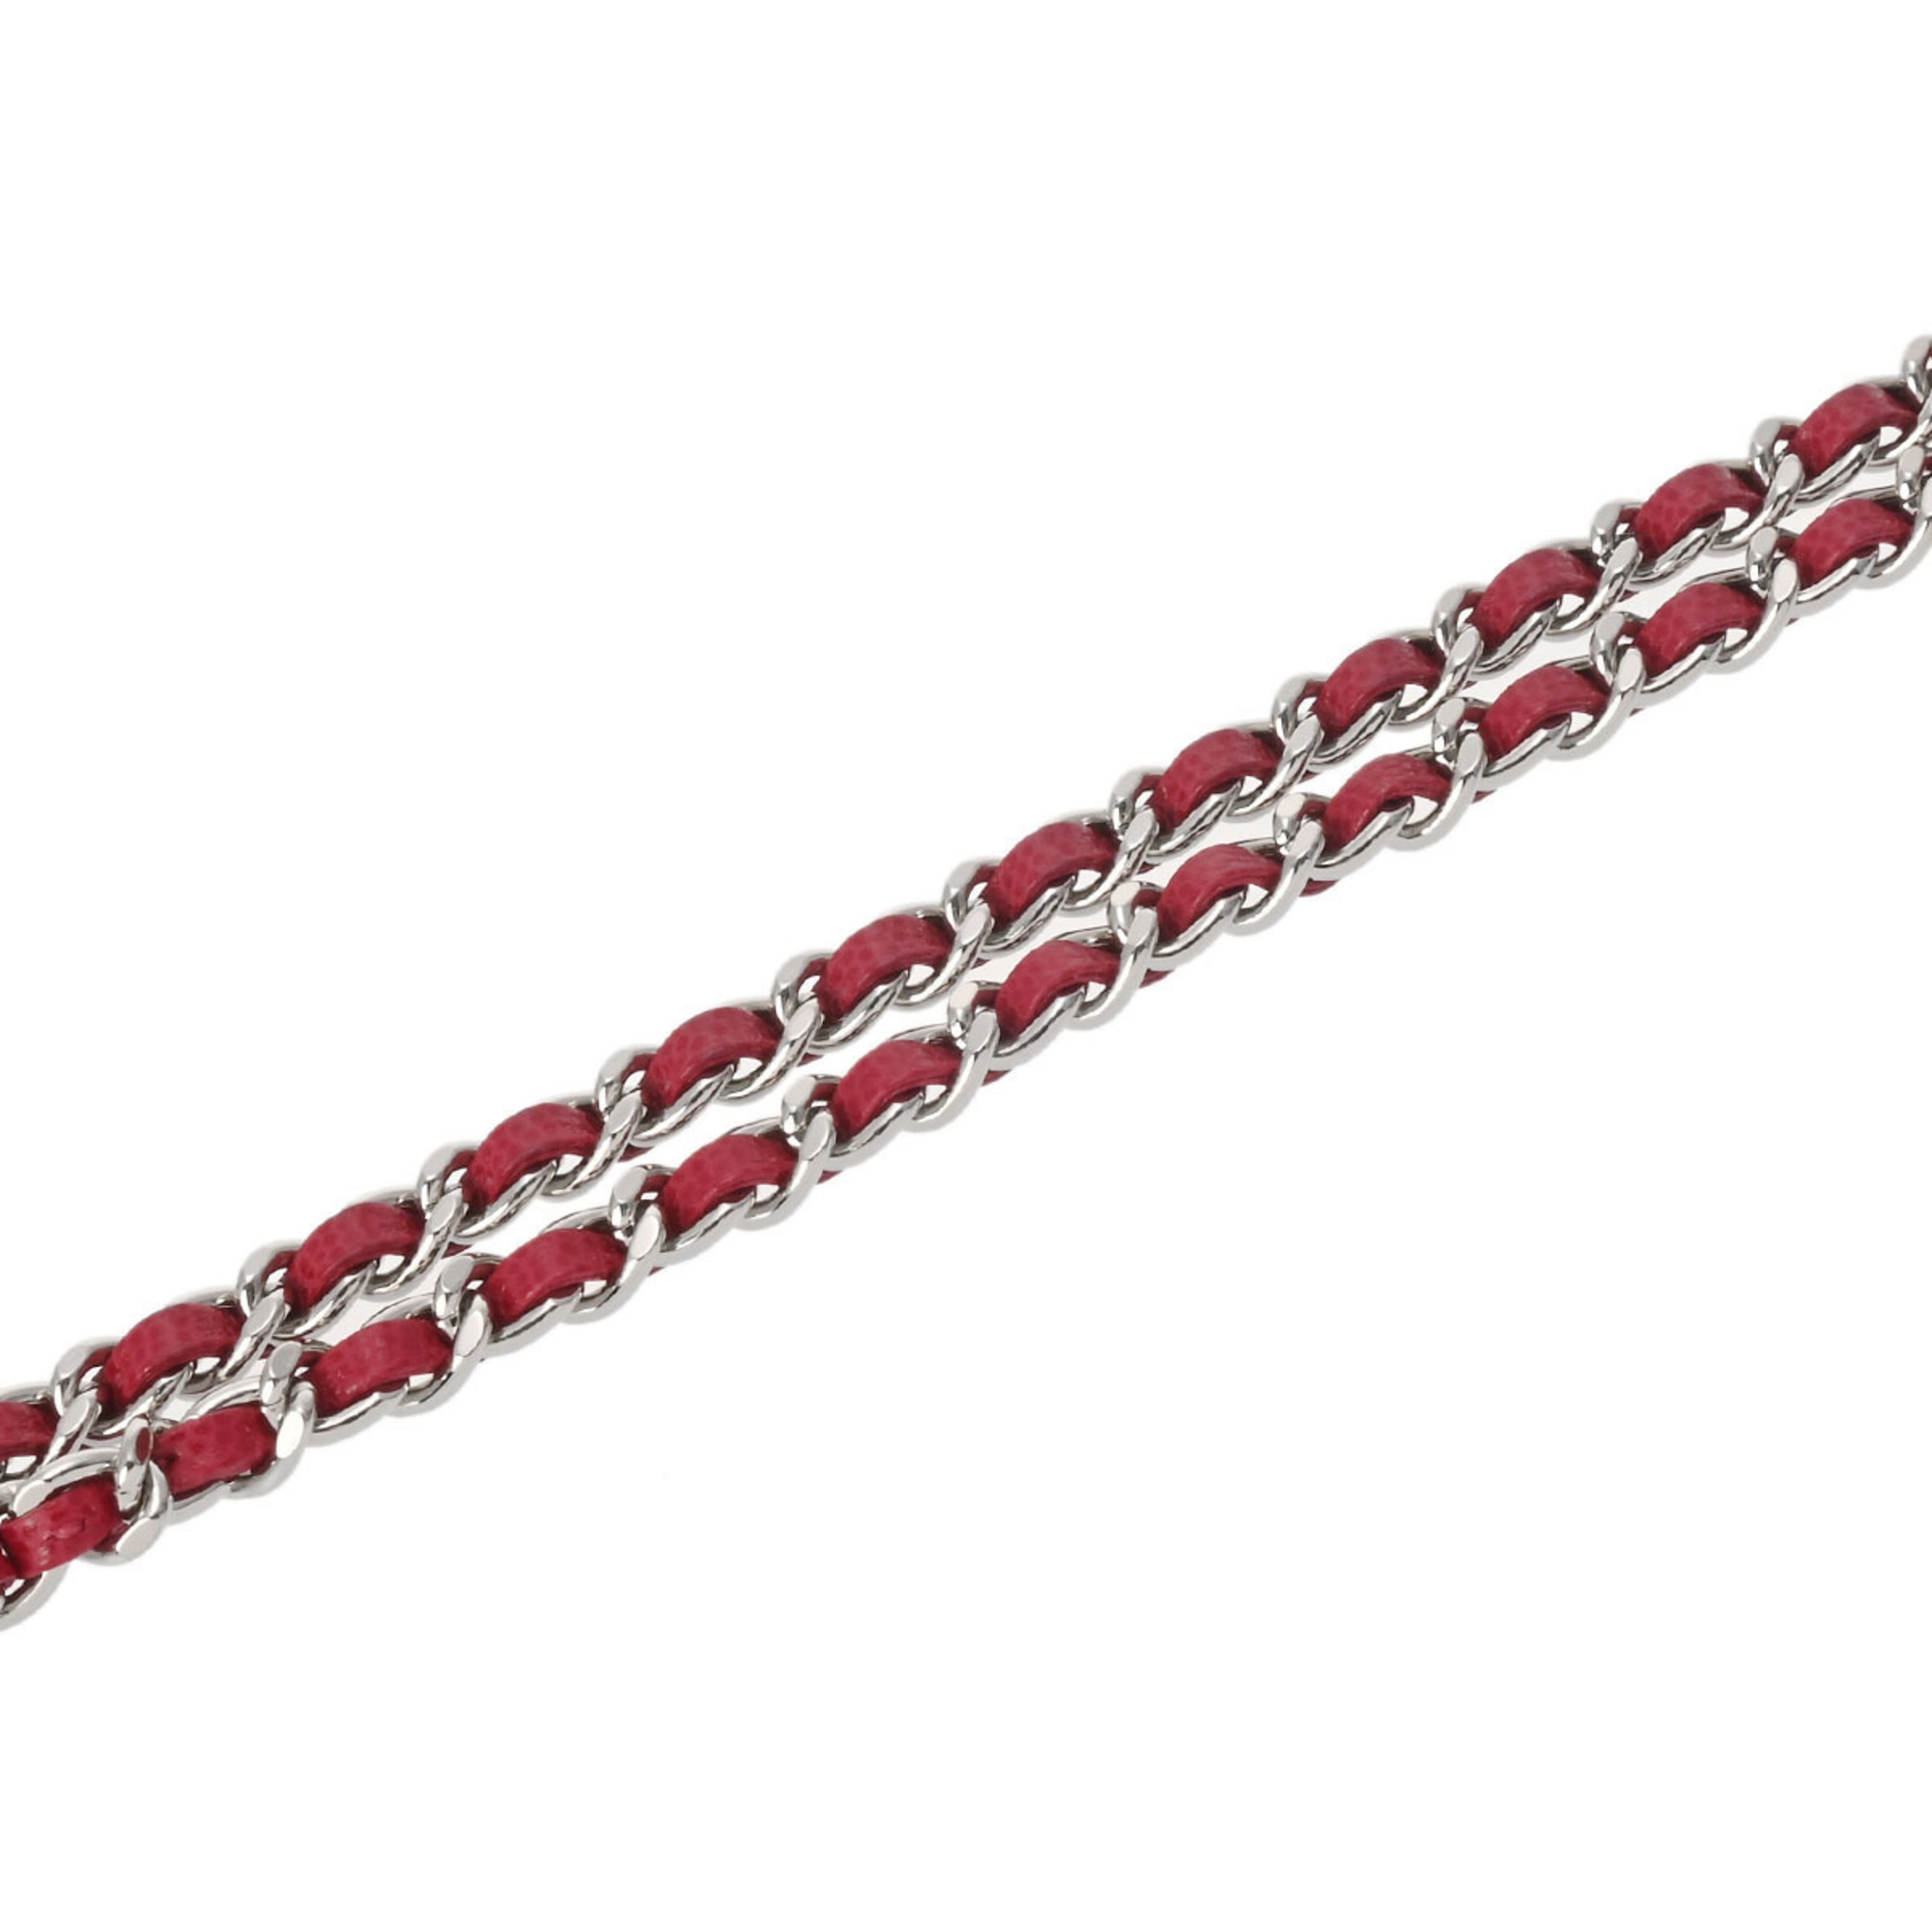 CHANEL Chanel Matelasse Chain Red A33814 Women's Caviar Skin